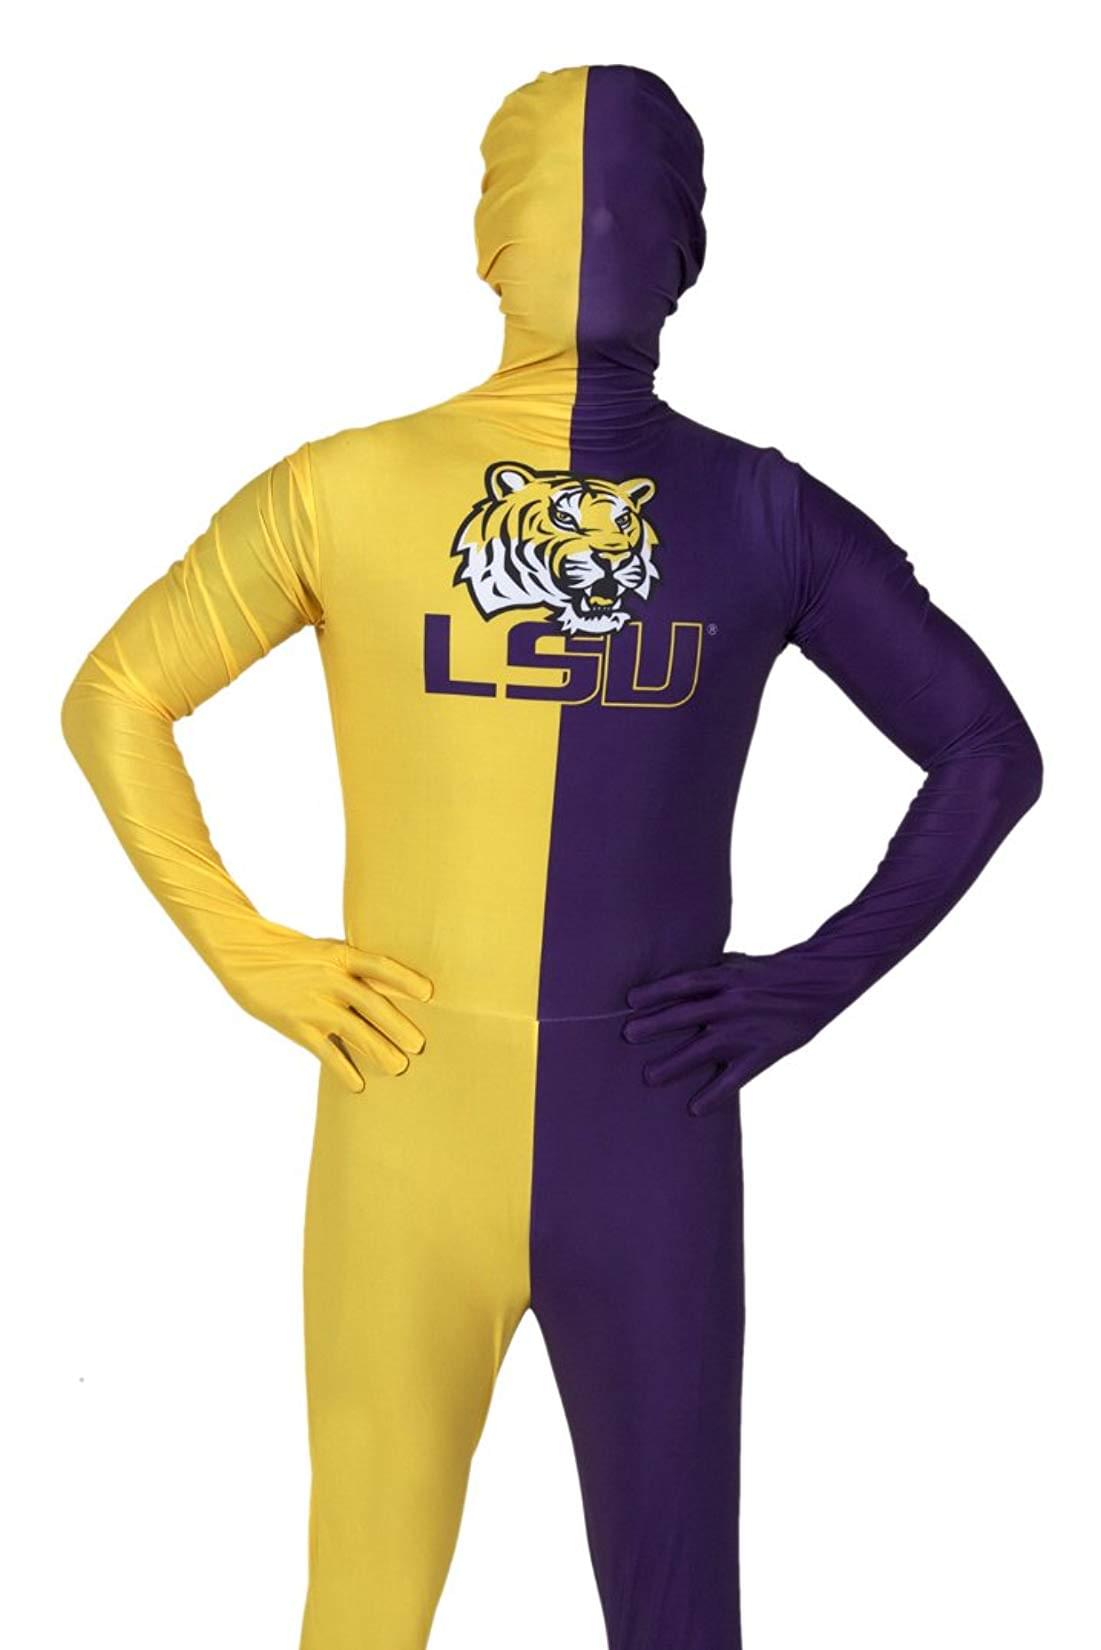 Louisiana State University Men's Skin Suit Costume Adult